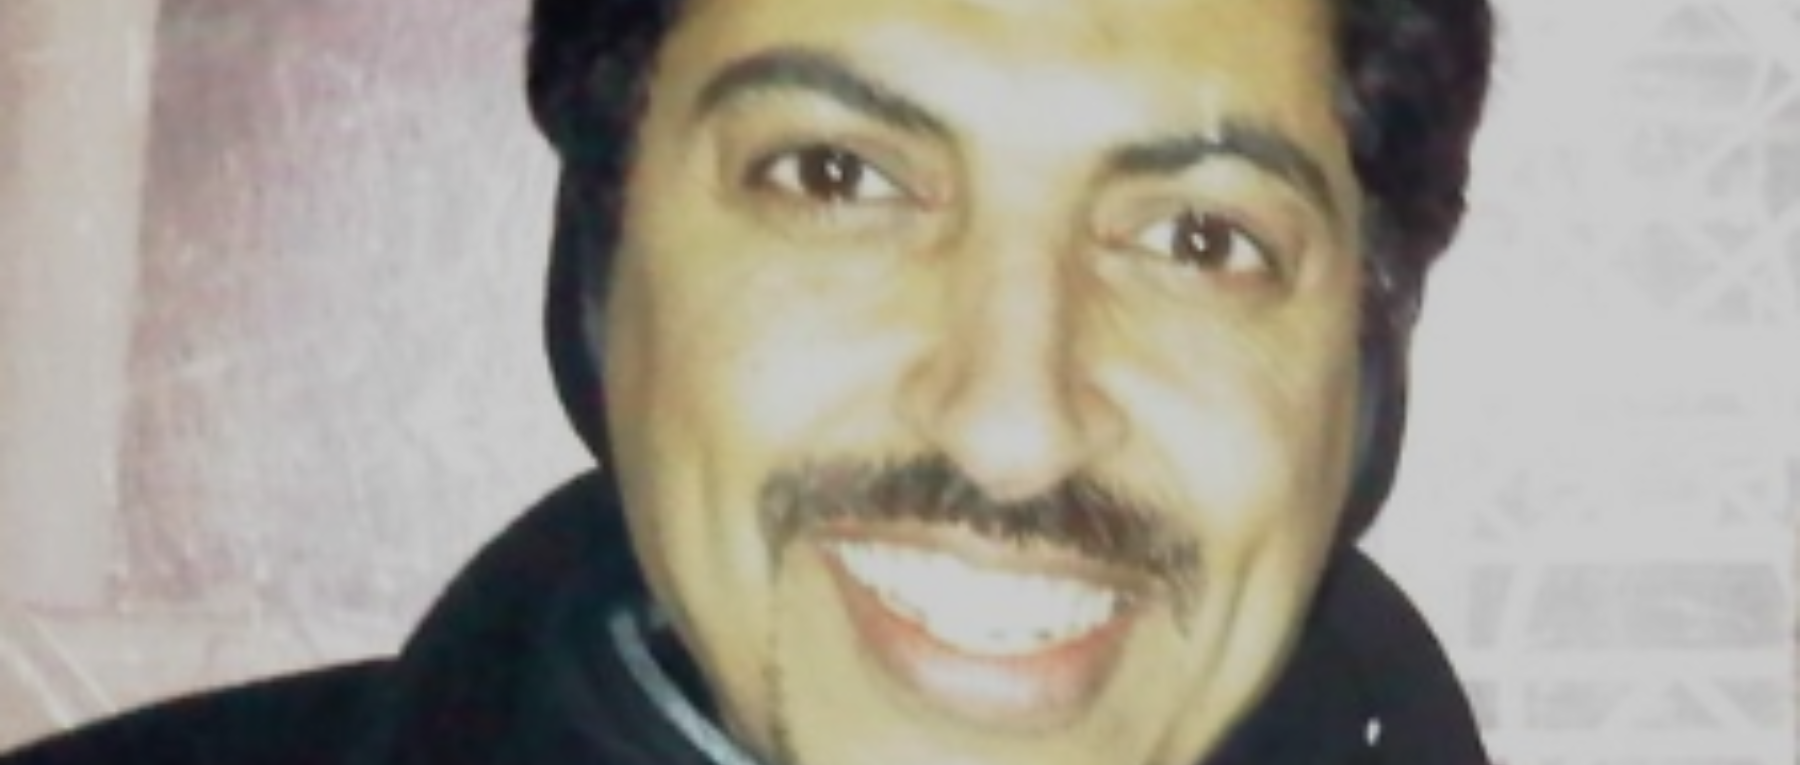 Urgent Action: Bahrain – Free Abdulhadi Al-Khawaja